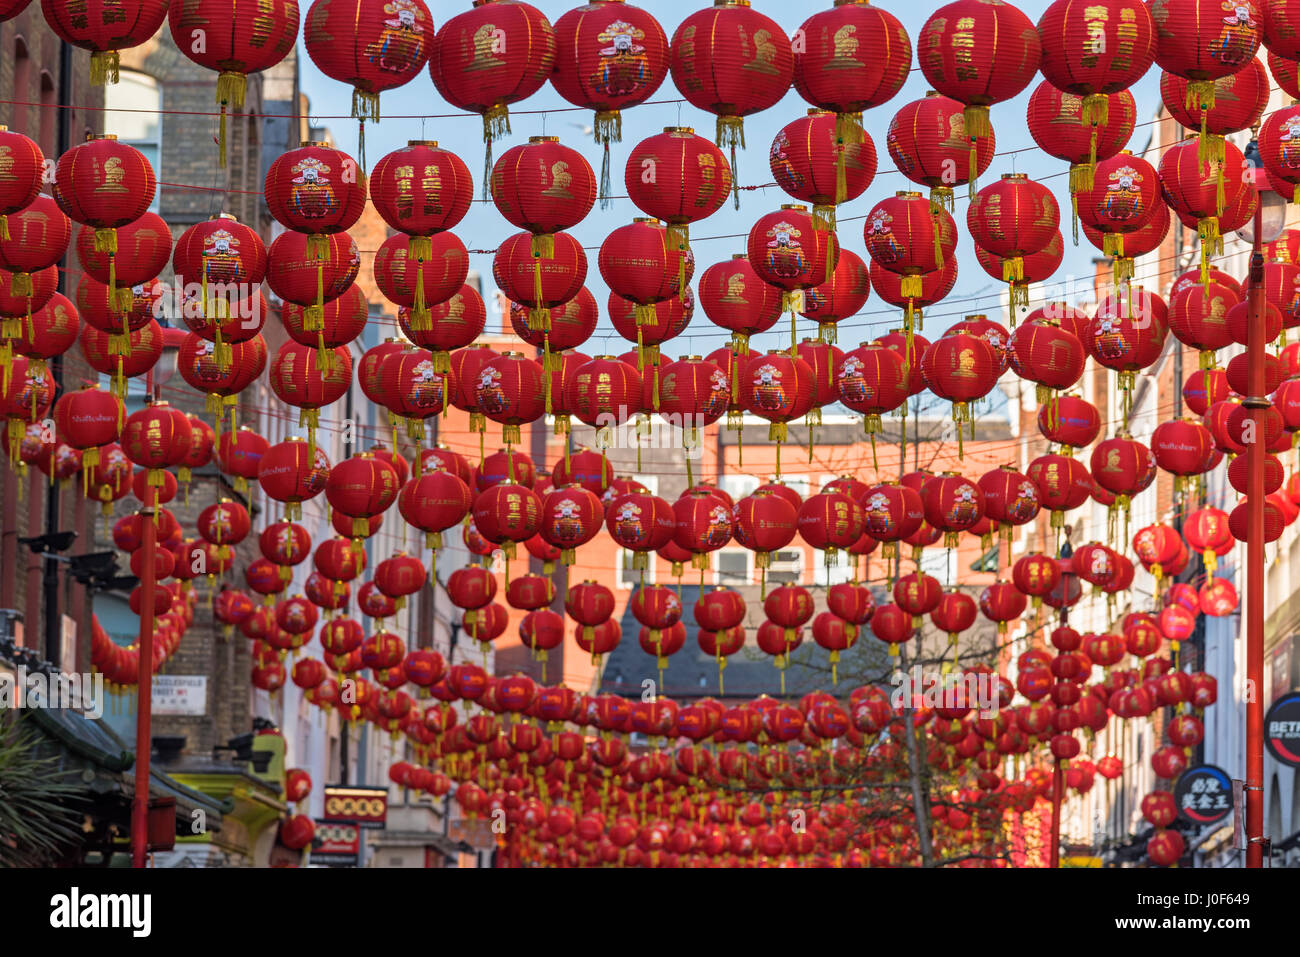 Lanternes chinoises Gerrard Street Chinatown London UK Banque D'Images